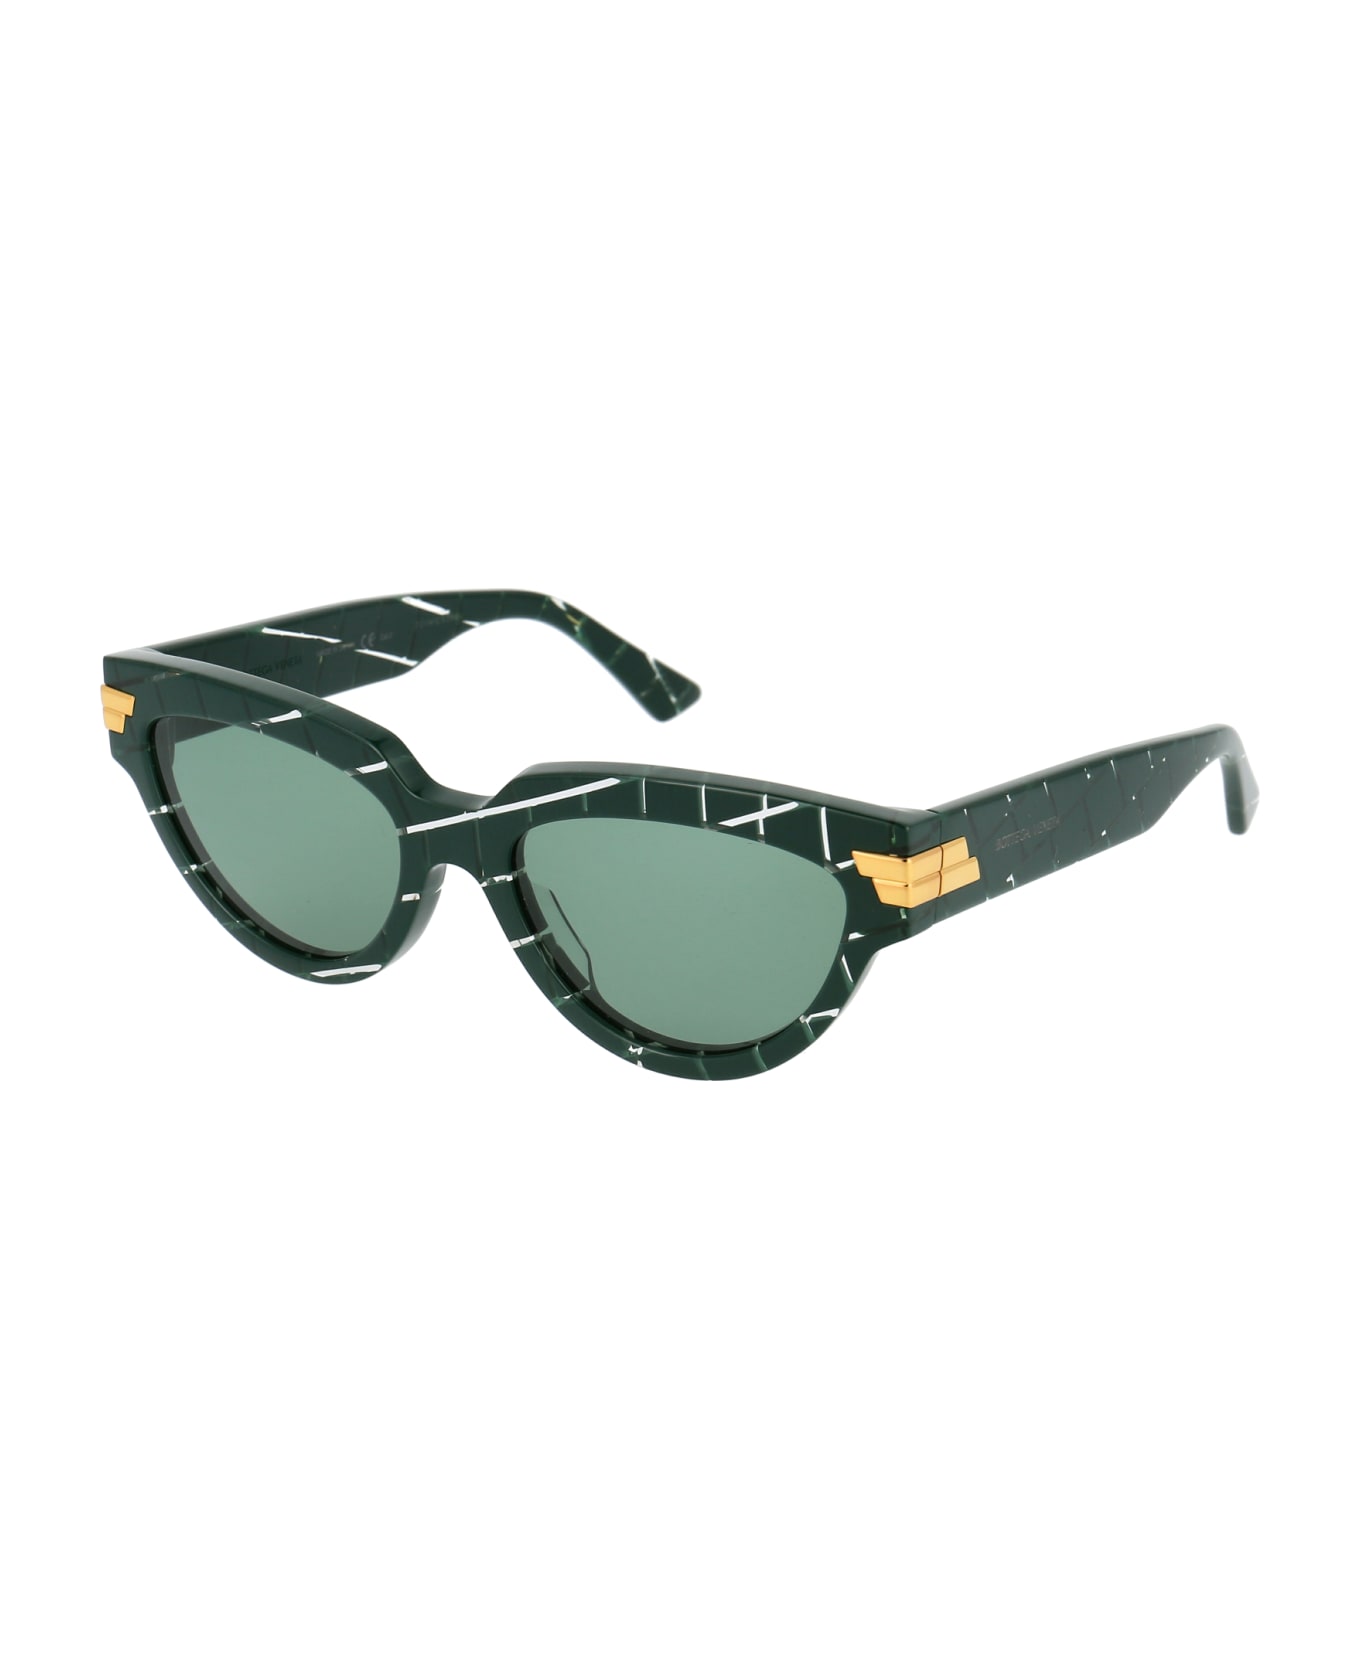 Bottega Veneta Eyewear Bv1035s Sunglasses - 004 GREEN GREEN GREEN サングラス